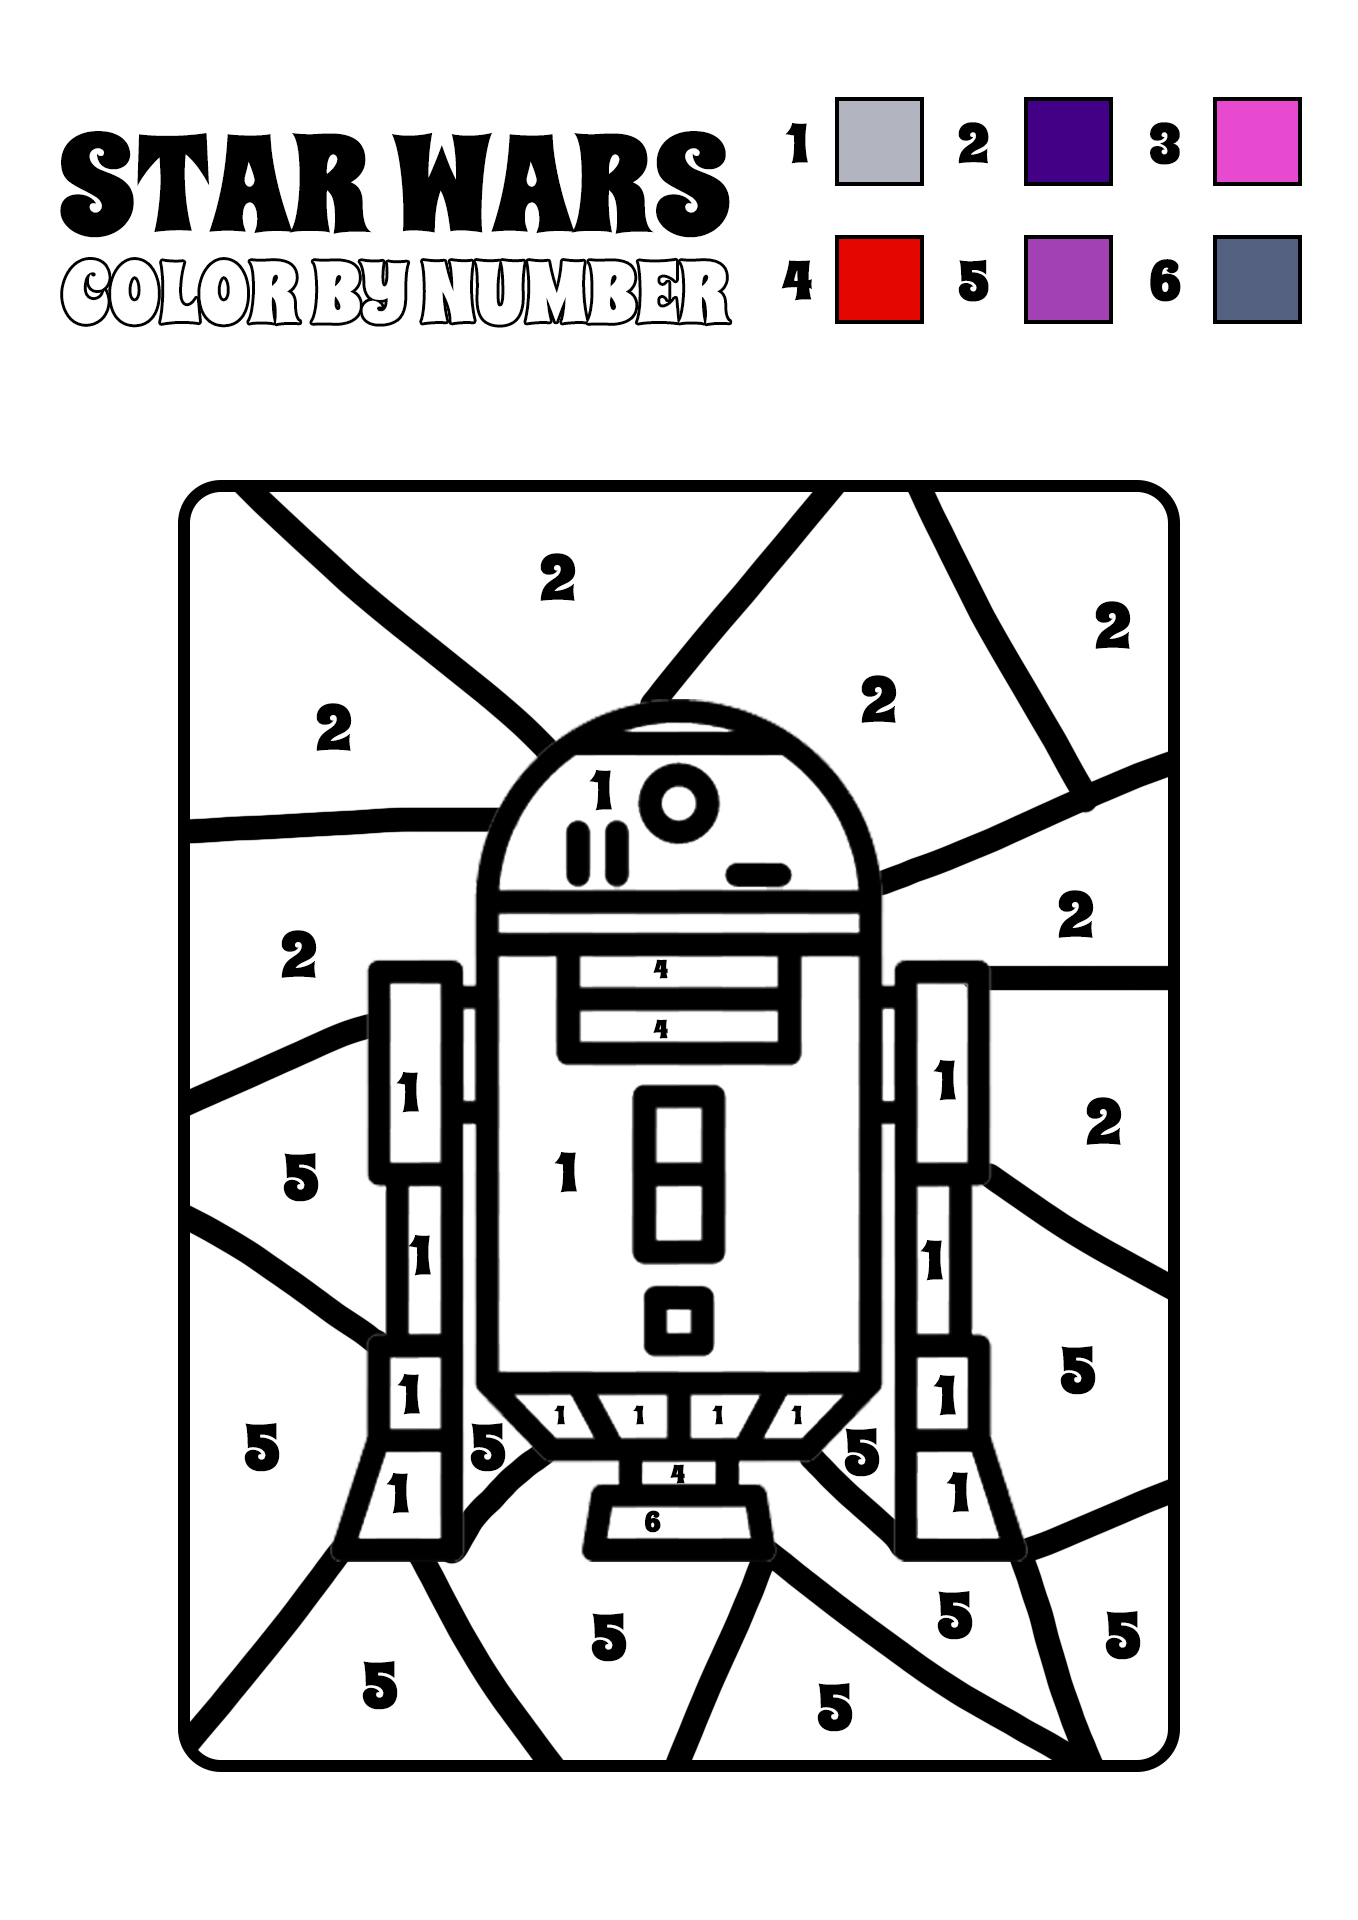 Star Wars Color by Number Math Worksheets Image